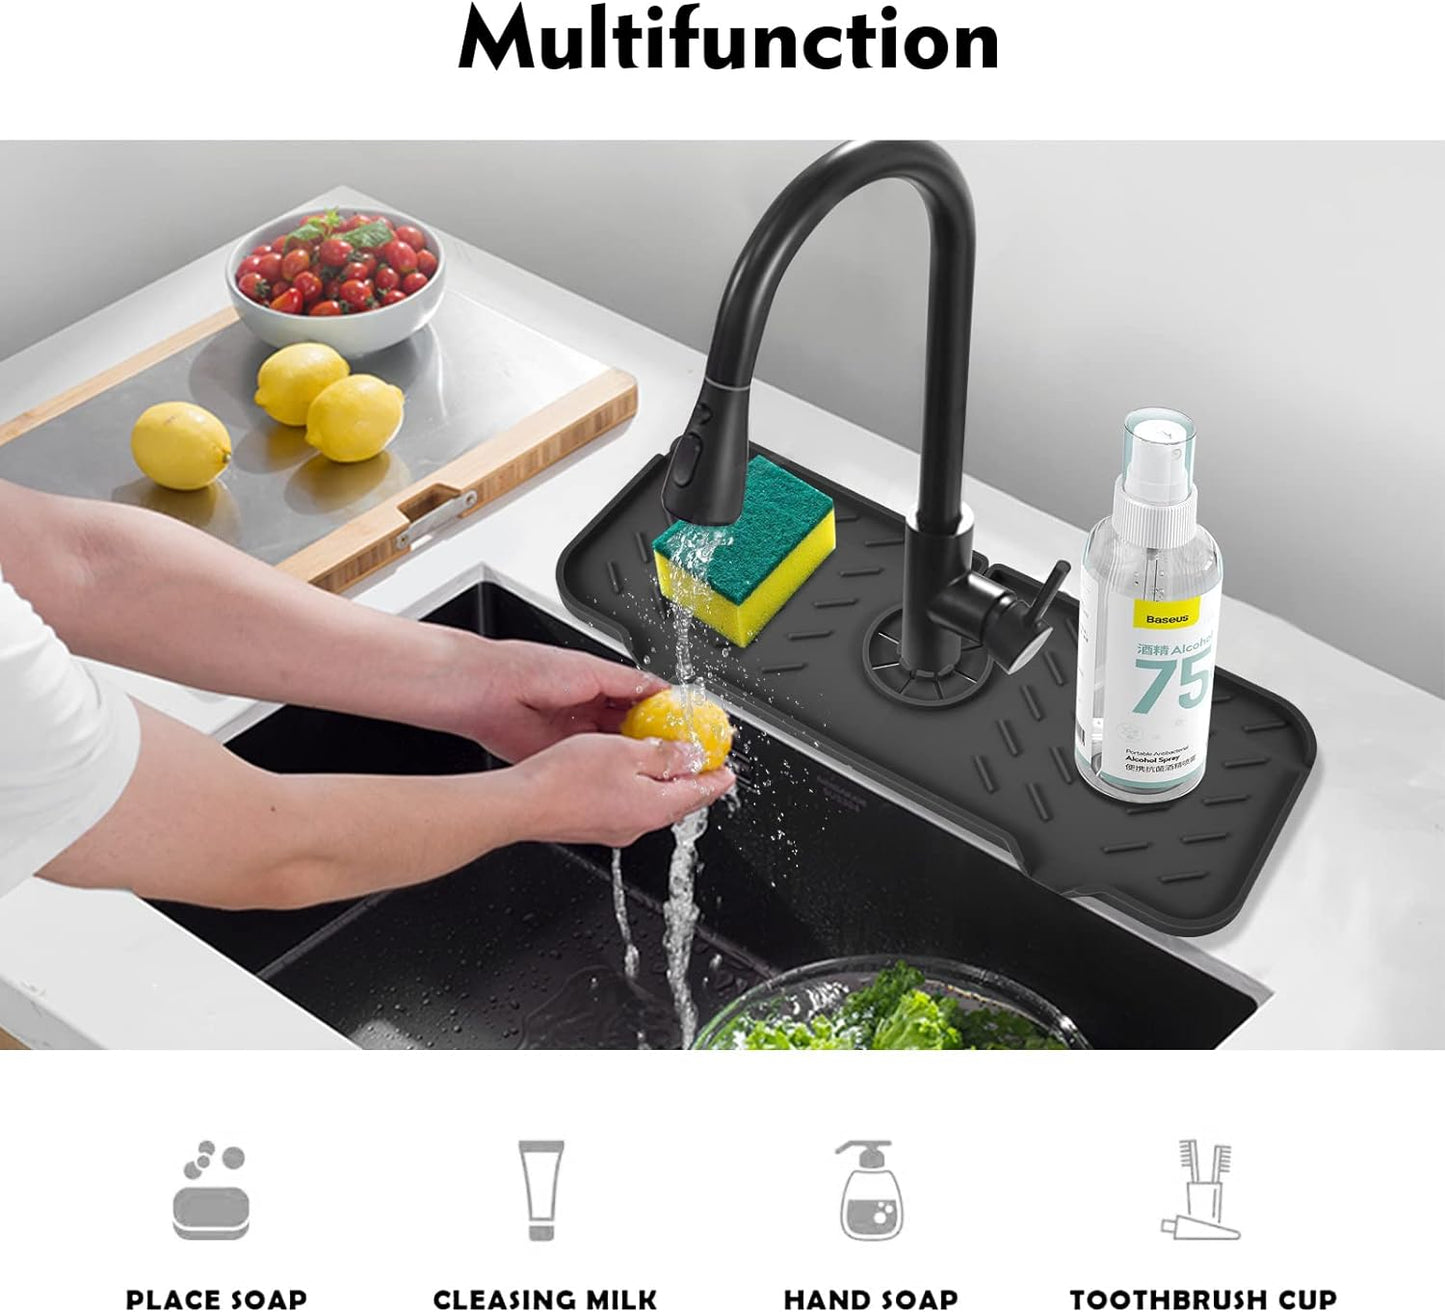 Kitchen Silicone Faucet Mat, Sink Splash Guard, Bathroom Faucet Water Catcher Mat - VENMATE Keep Drying Kitchen Accessories (Black, 14.6" x 5.5")